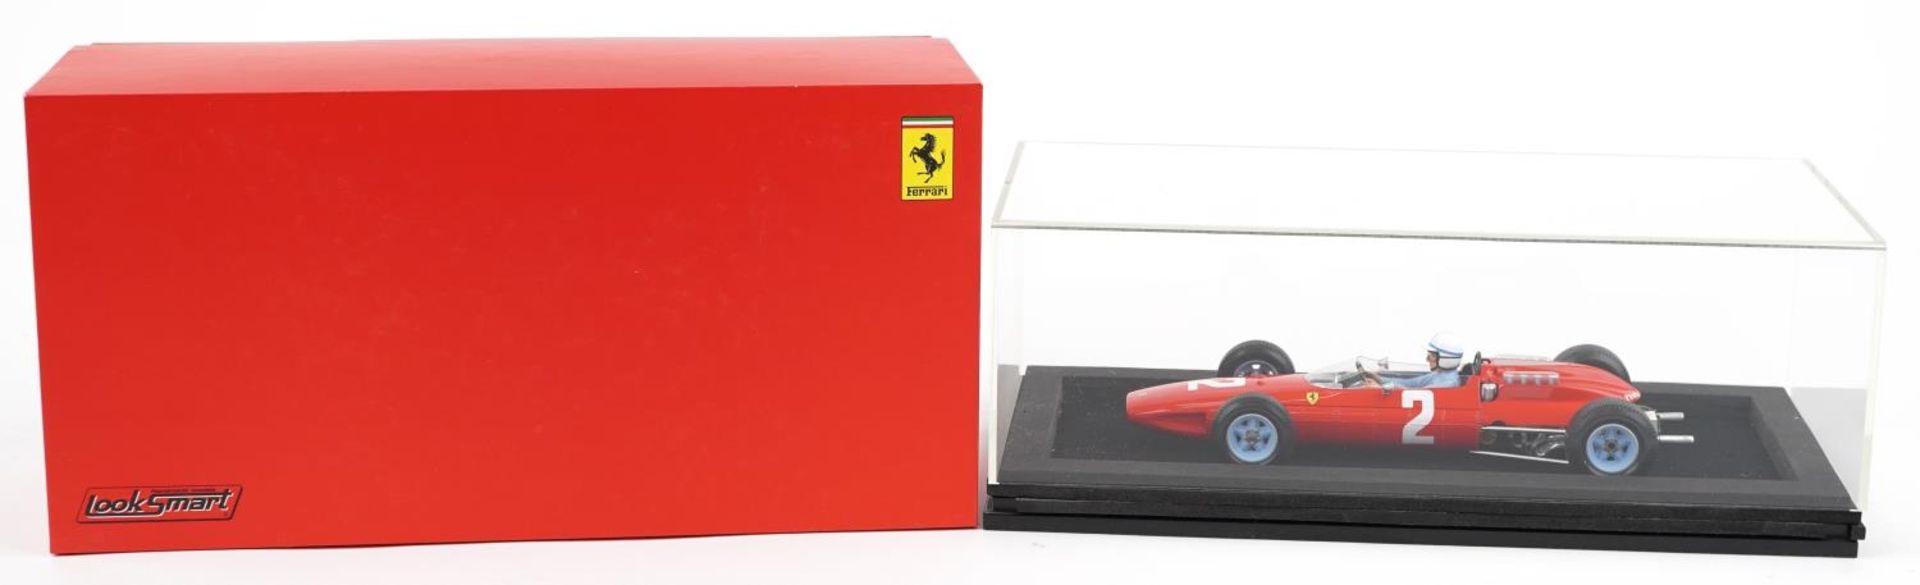 Looksmart 1:18 scale diecast model Ferrari 158 Winner of the Italian Grand Prix 1964, with box and